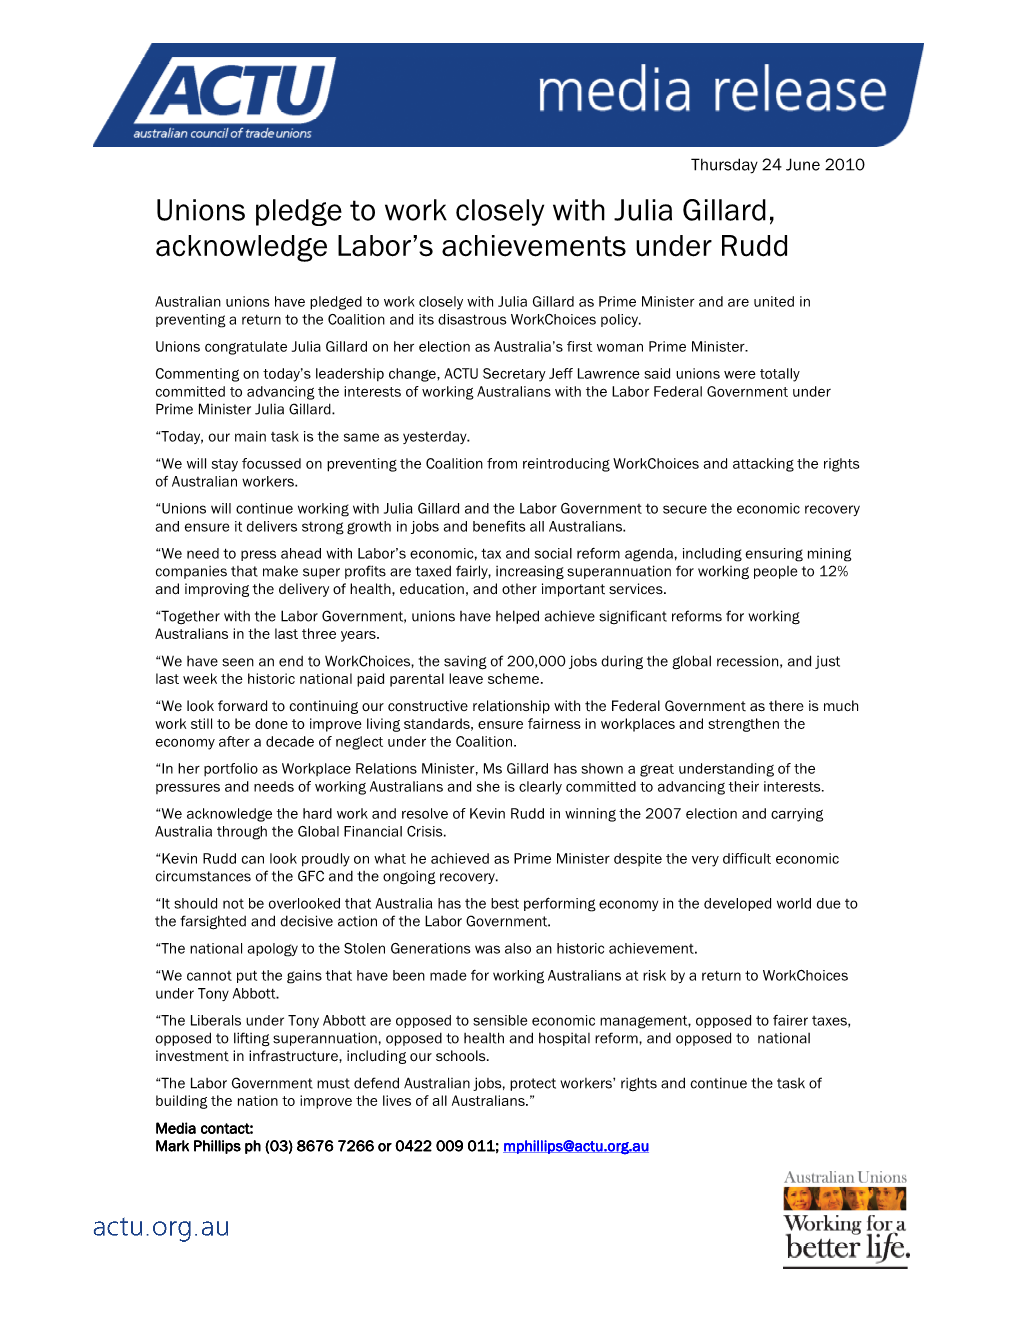 Unions Pledge to Work Closely with Julia Gillard, Acknowledge Labor's Achievements Under Rudd